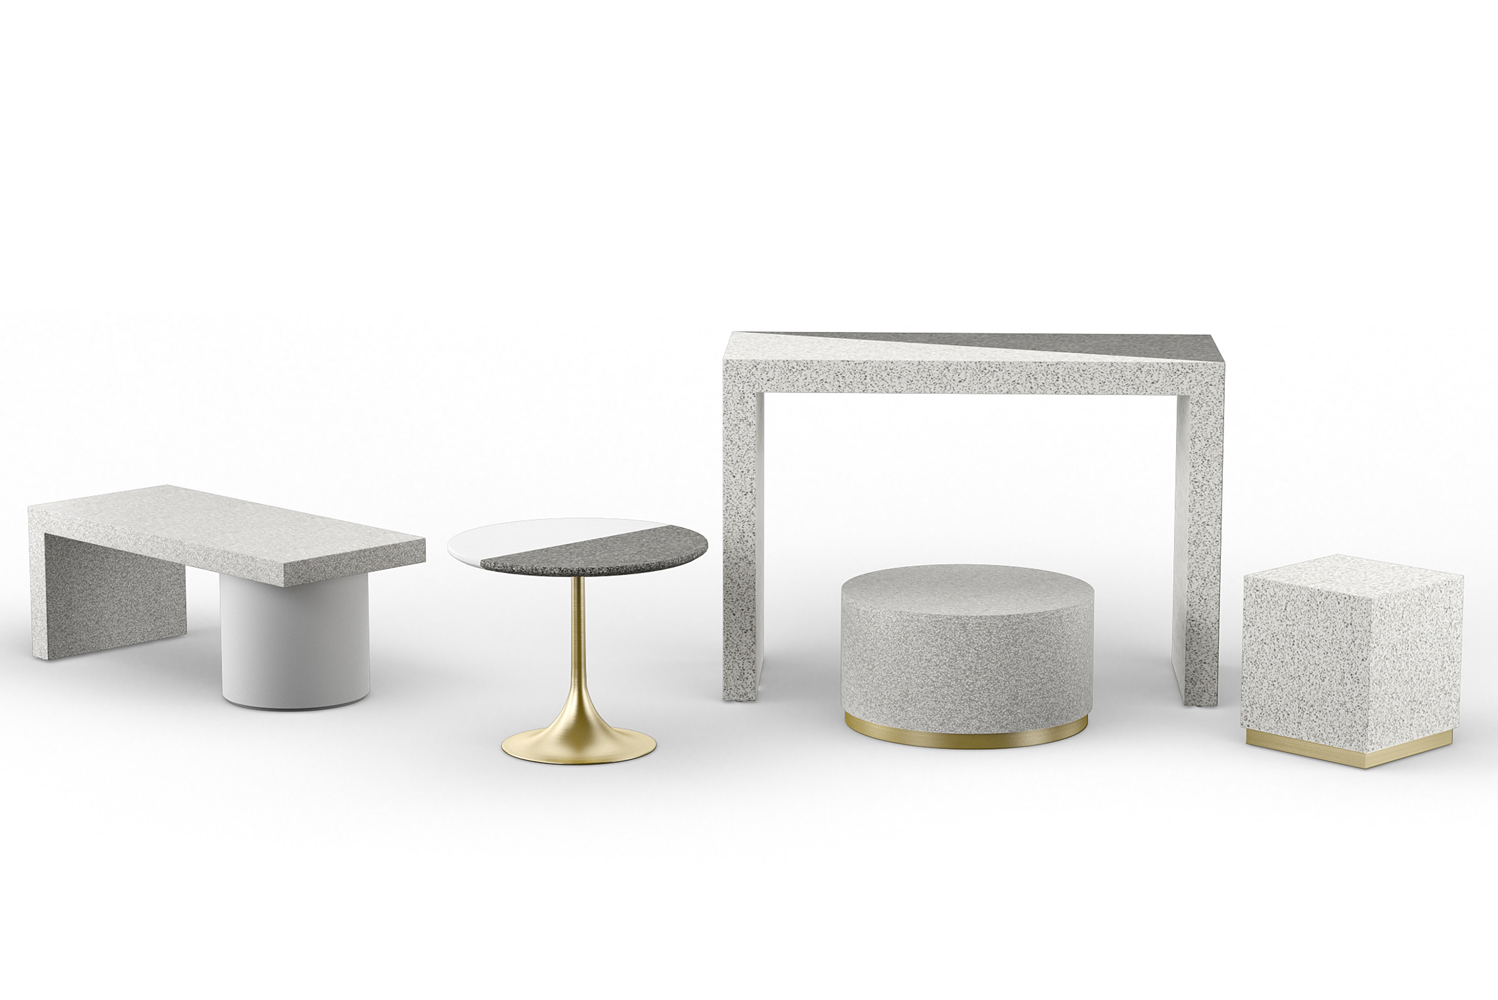 Futrus Solutions with Corian Design debuted the Vivo Terrazzo furniture collection 